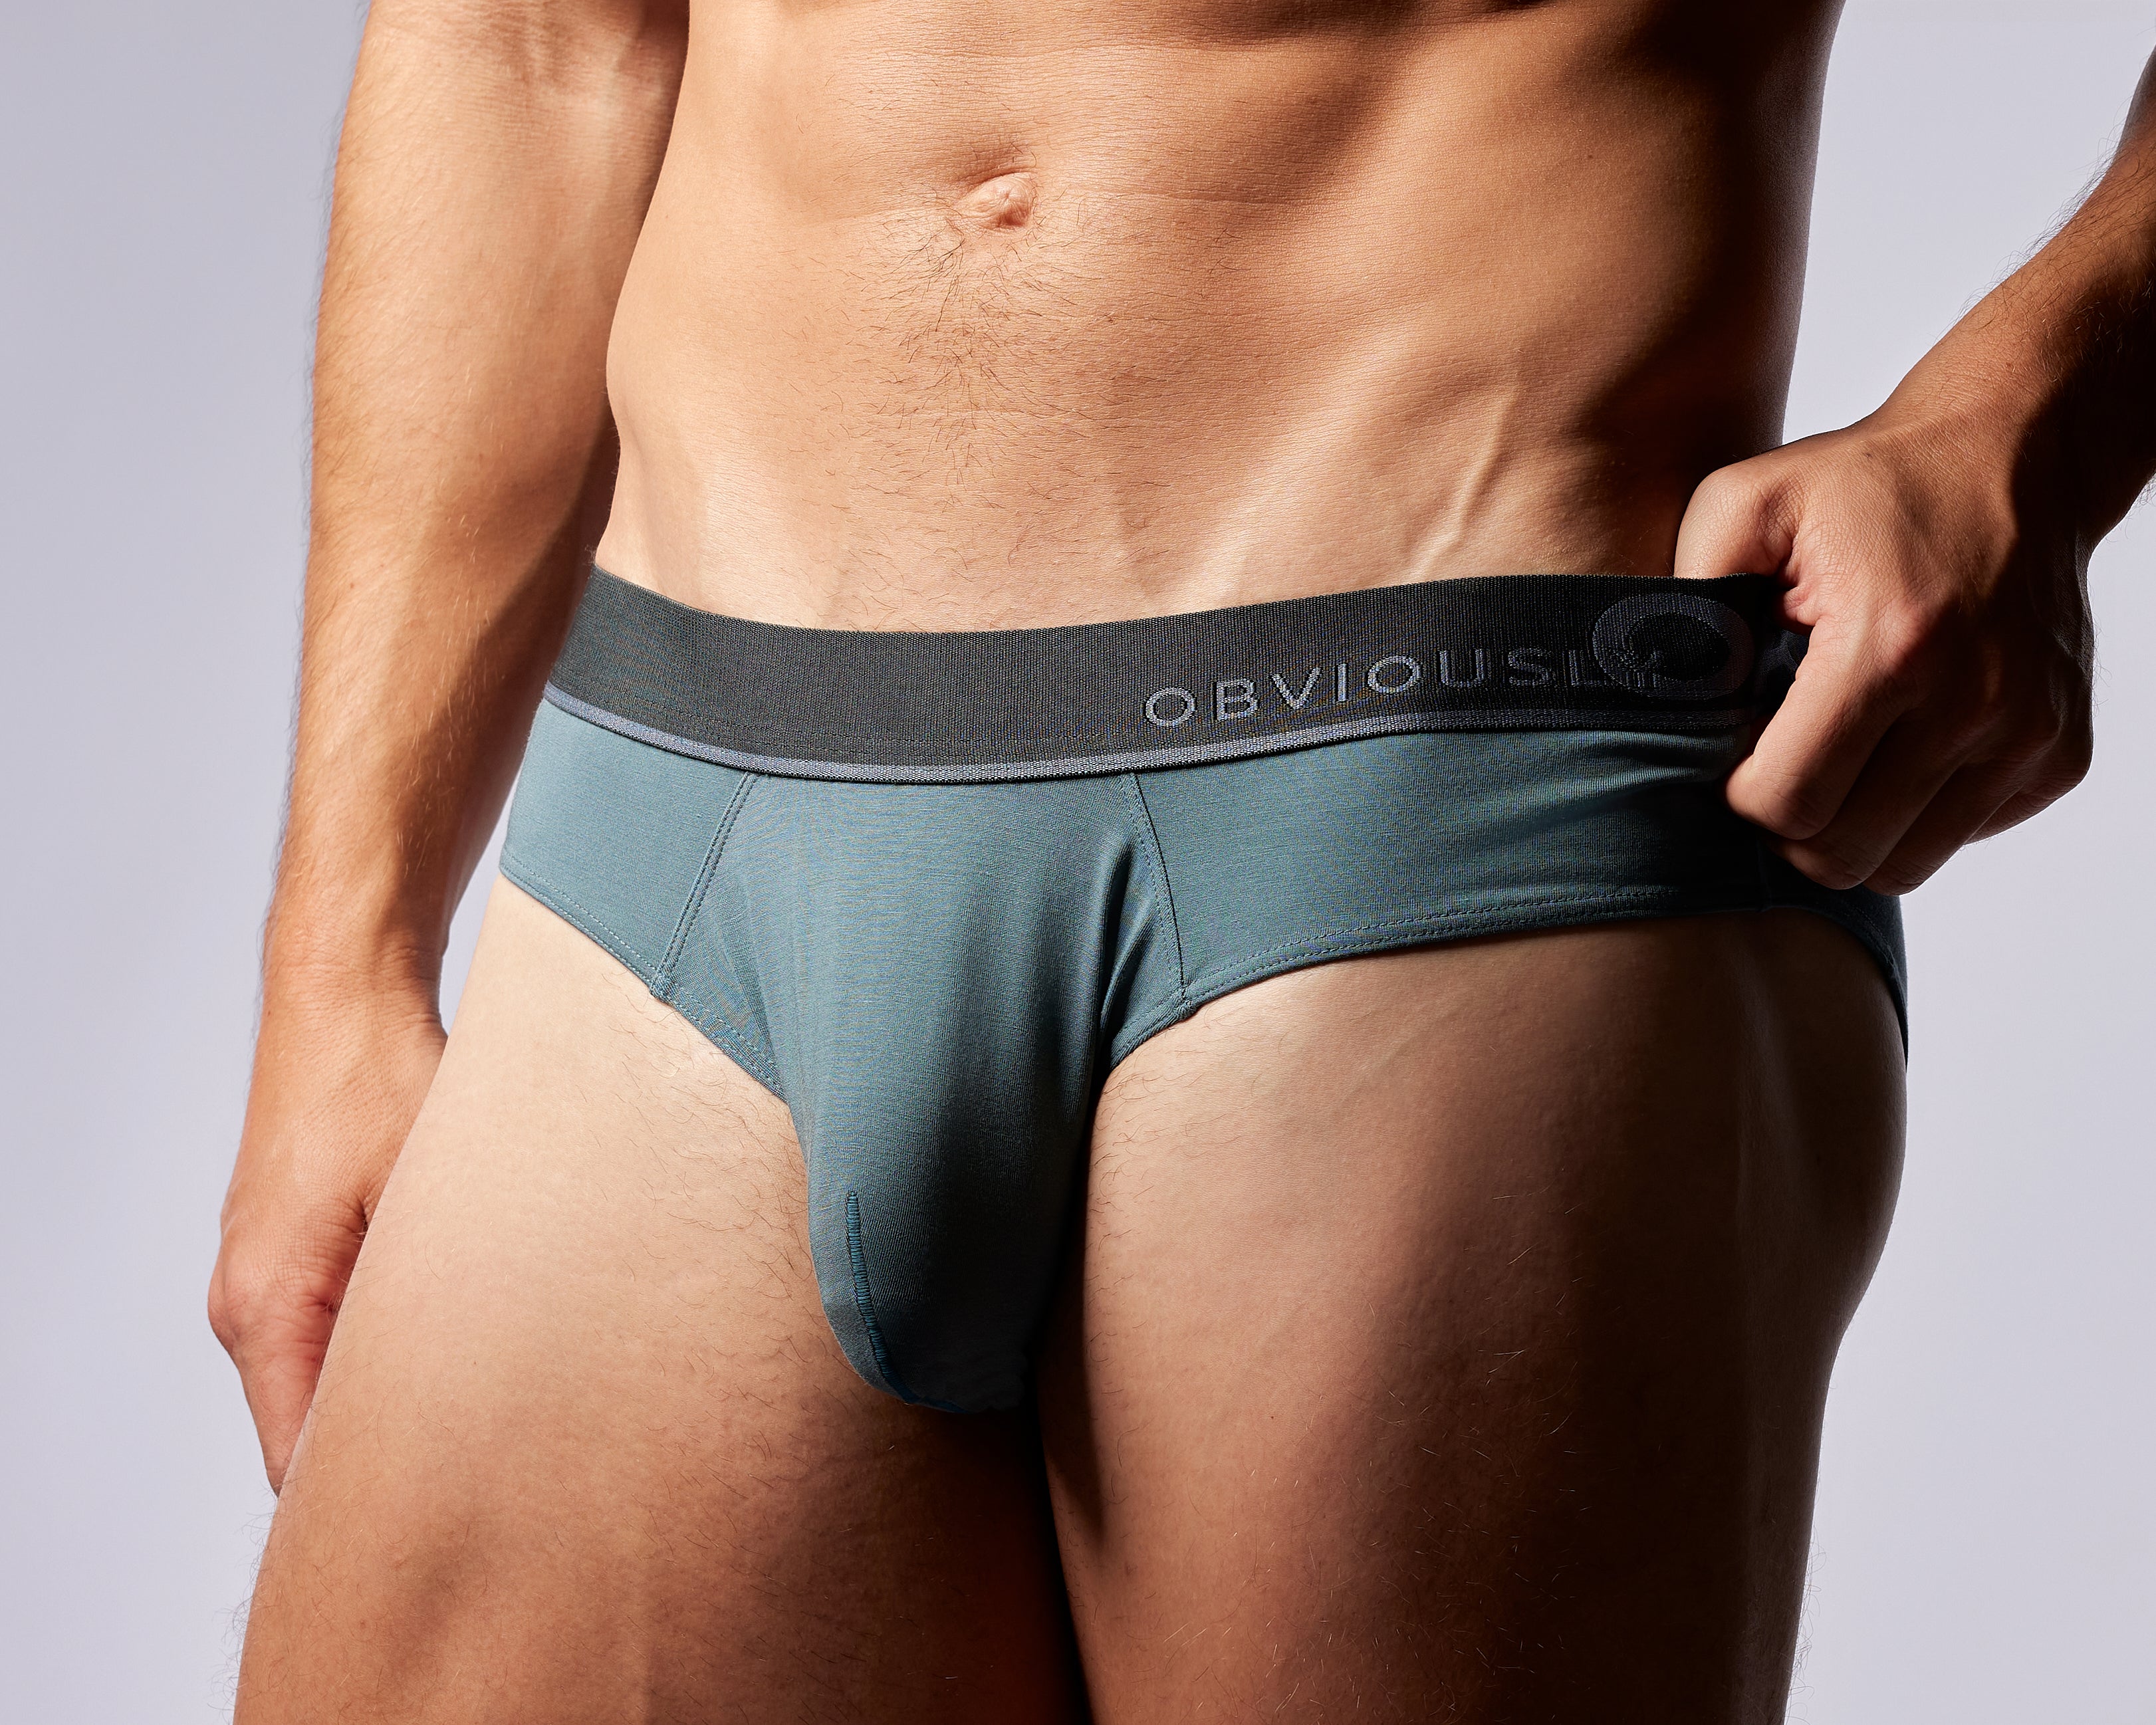 Plus-size male underwear: Comfort Republic